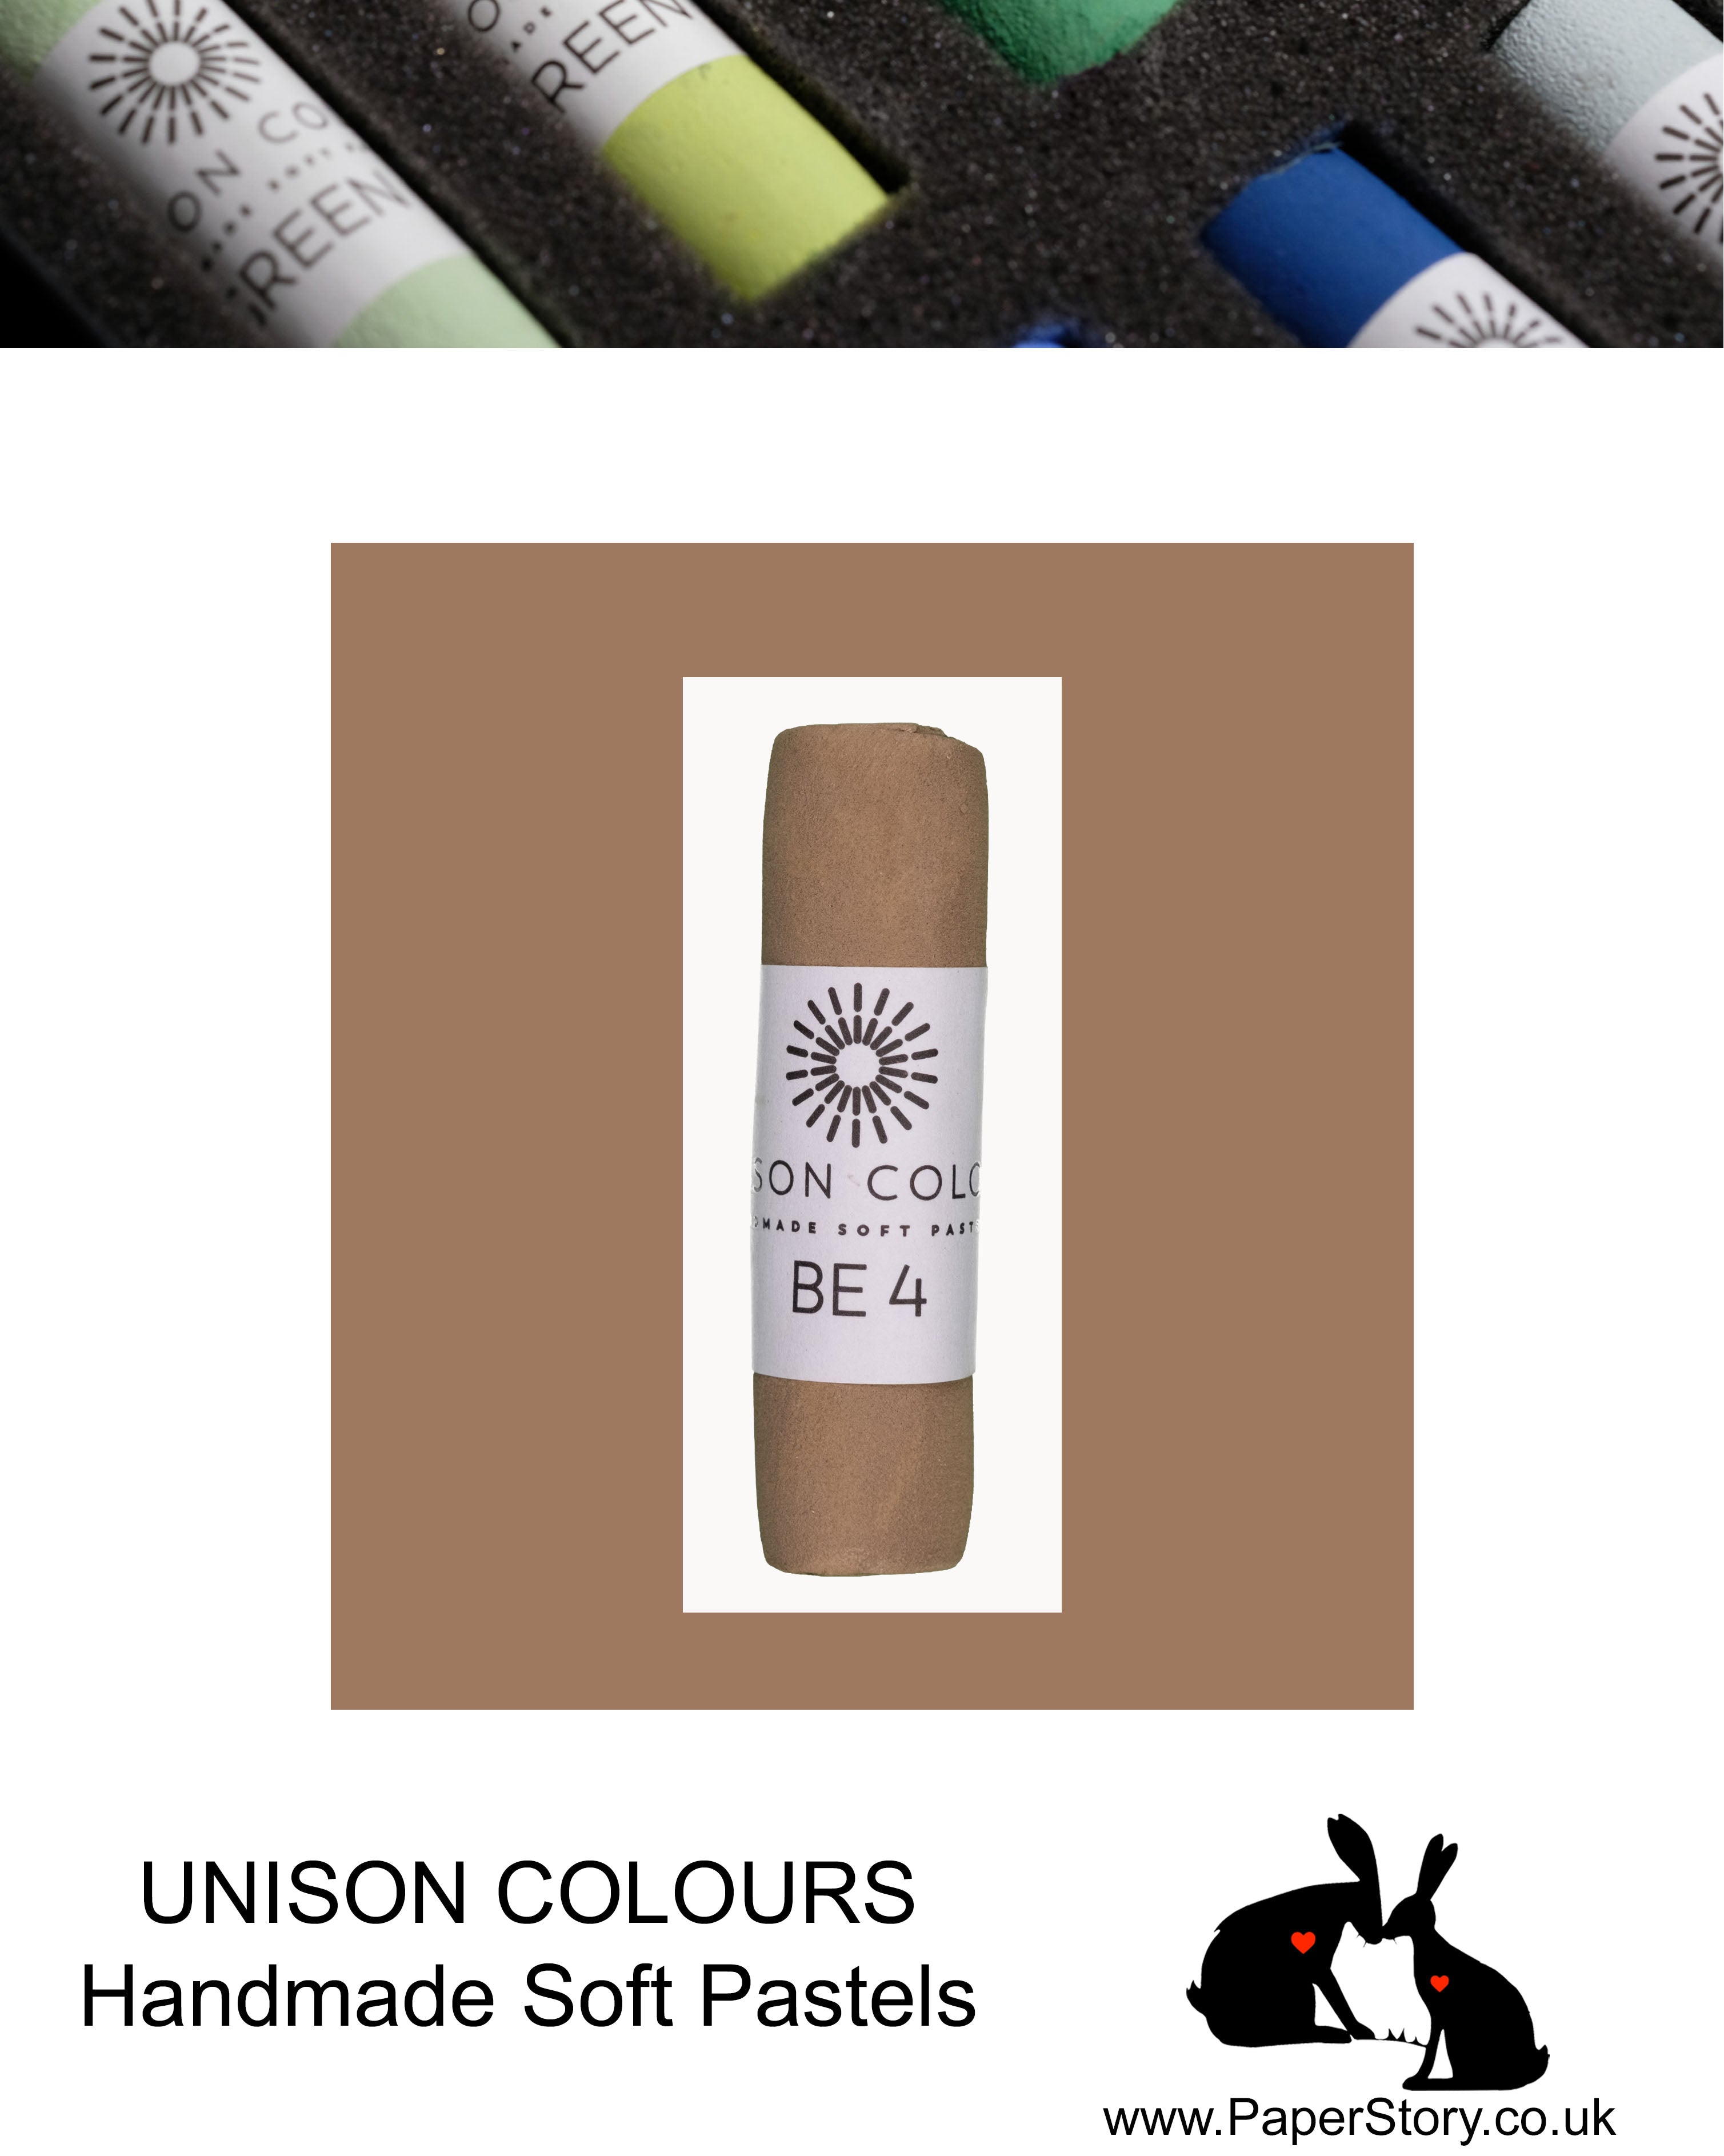 Unison Colour Handmade Soft Pastels Brown Earth 4 - Size Regular